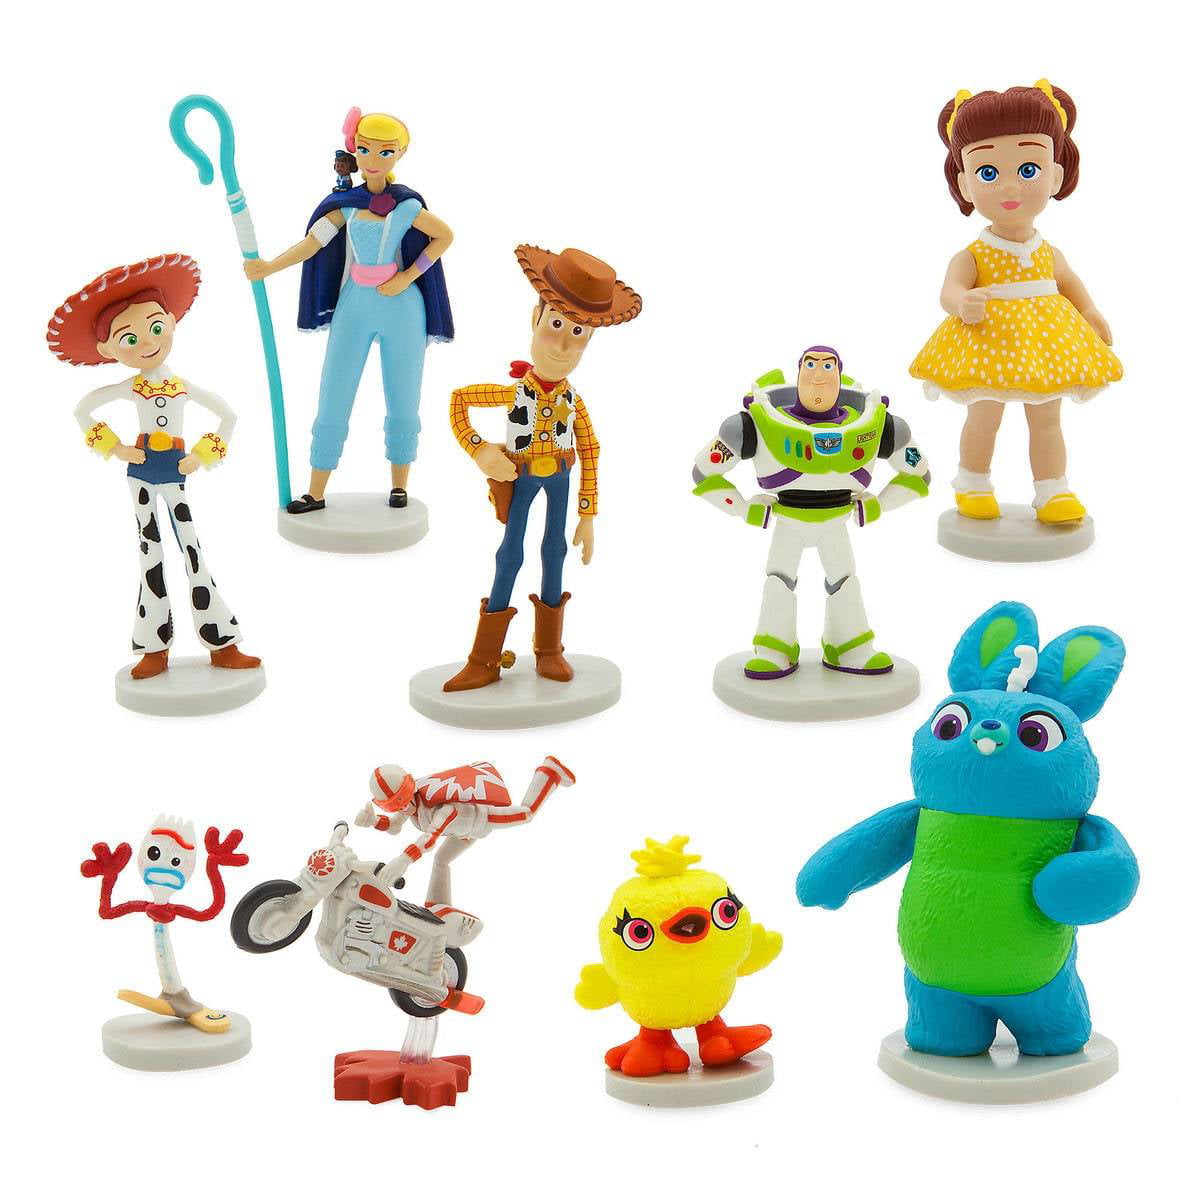 Details about   Disney/Pixar Toy Story 4" Basic Figures #1 3 Pack 